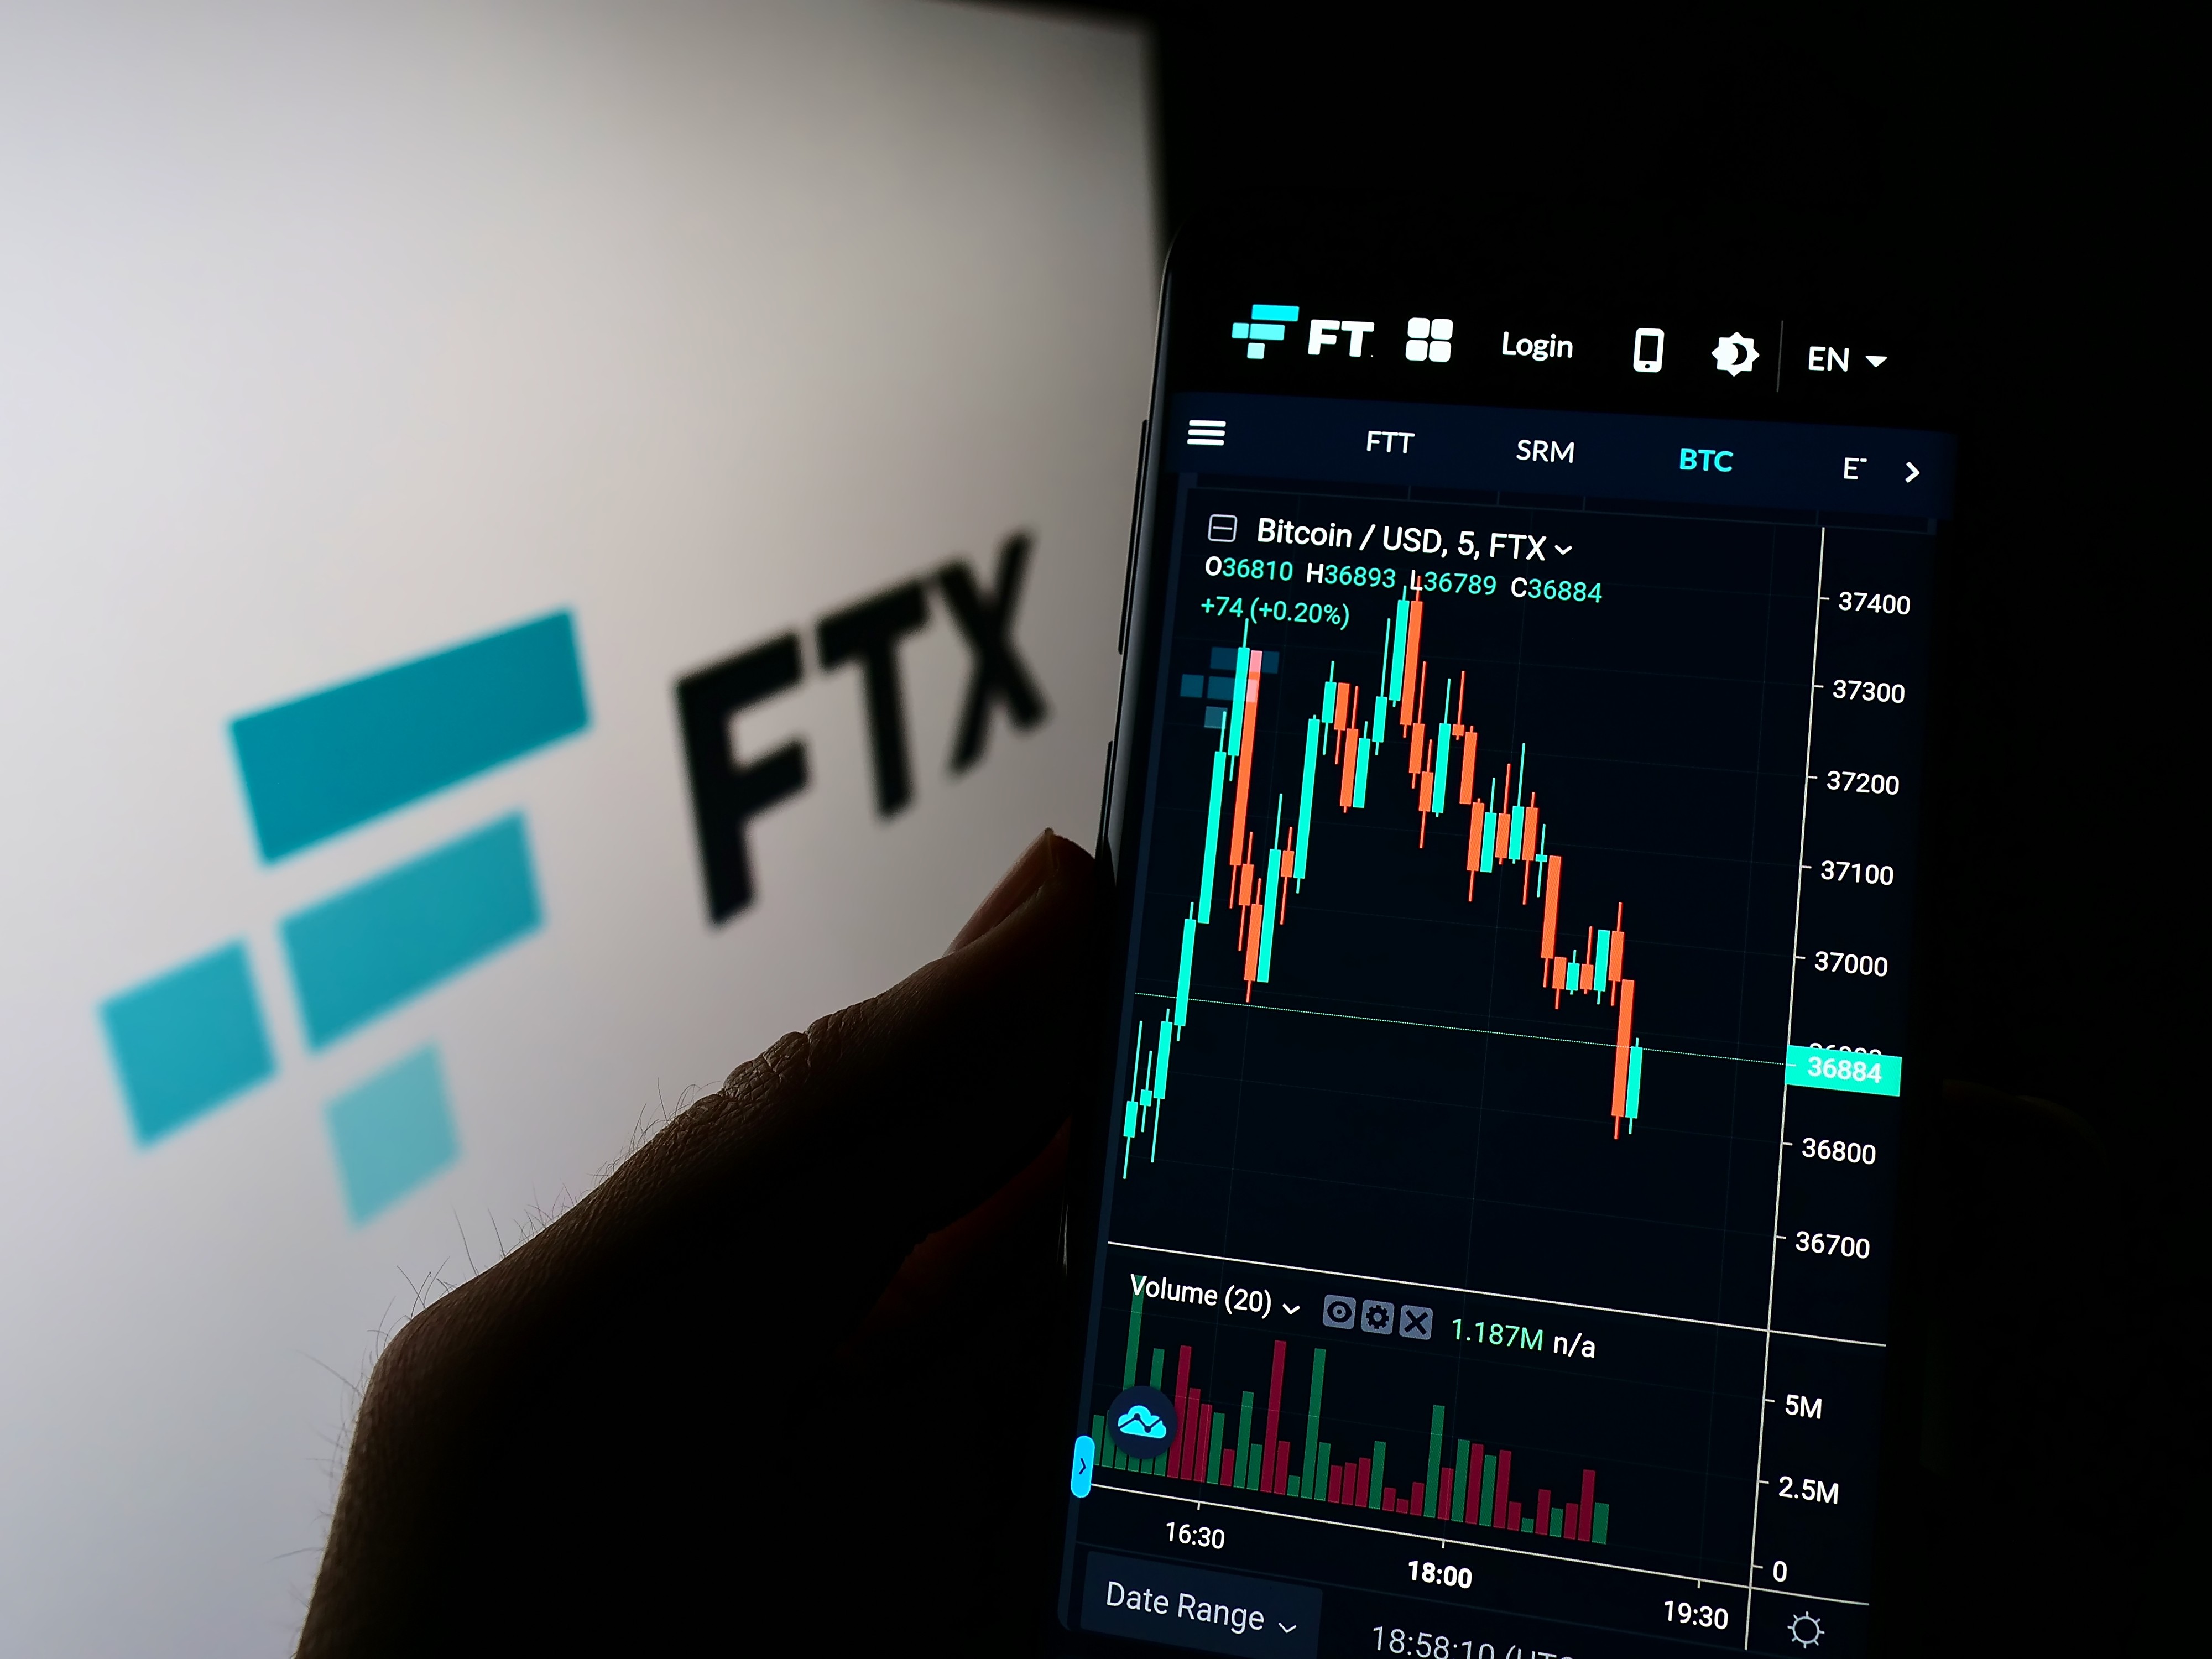 Tom Brady, Gisele Bündchen Take Stake in Crypto Firm FTX - Bloomberg